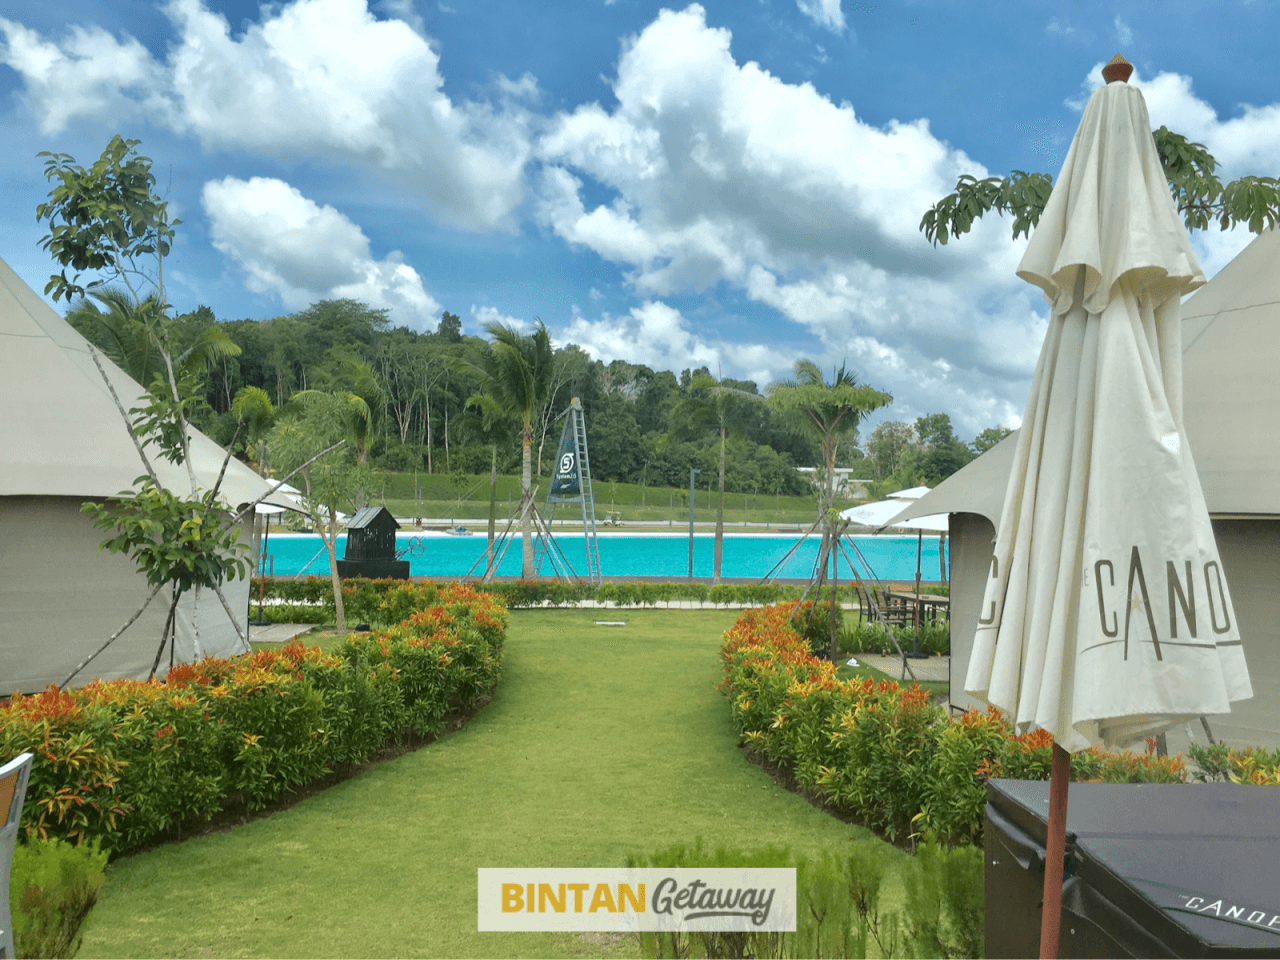 The Canopi Resort Bintan - Walk from Tent to Lagoon